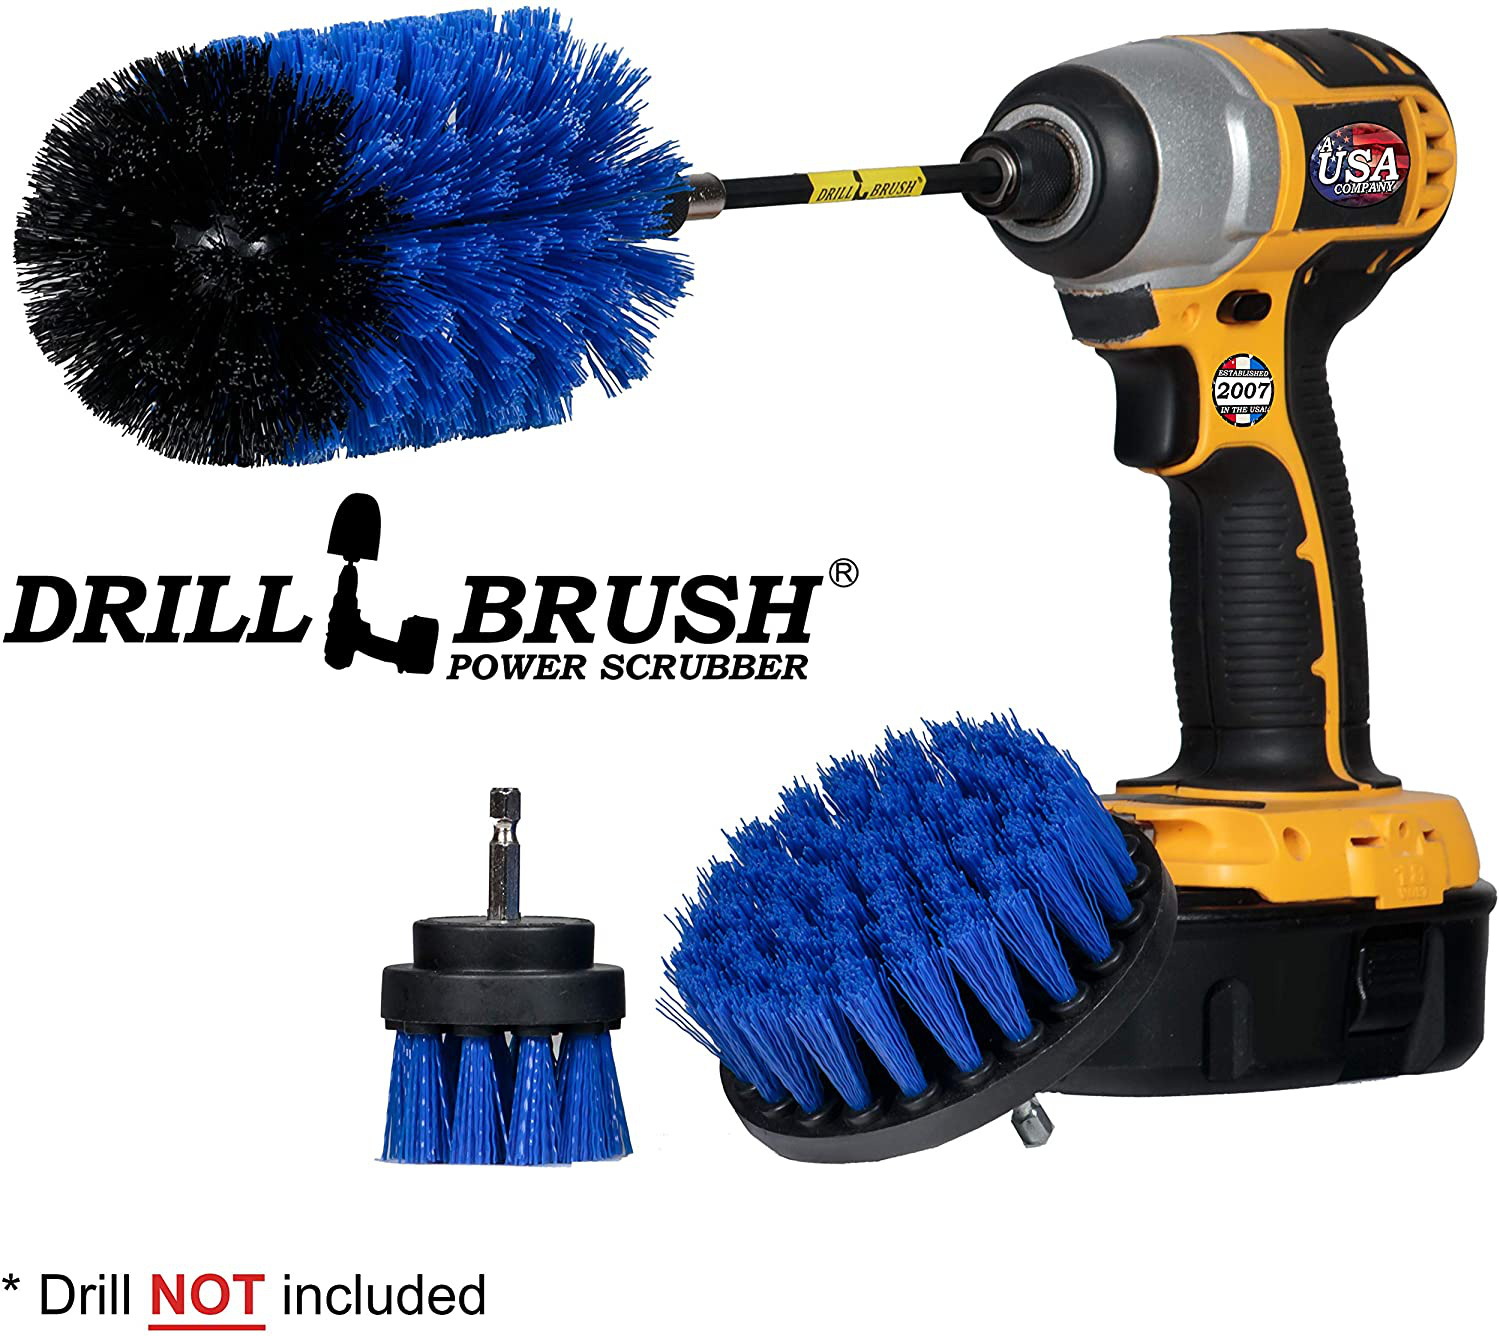 Drill Brushes